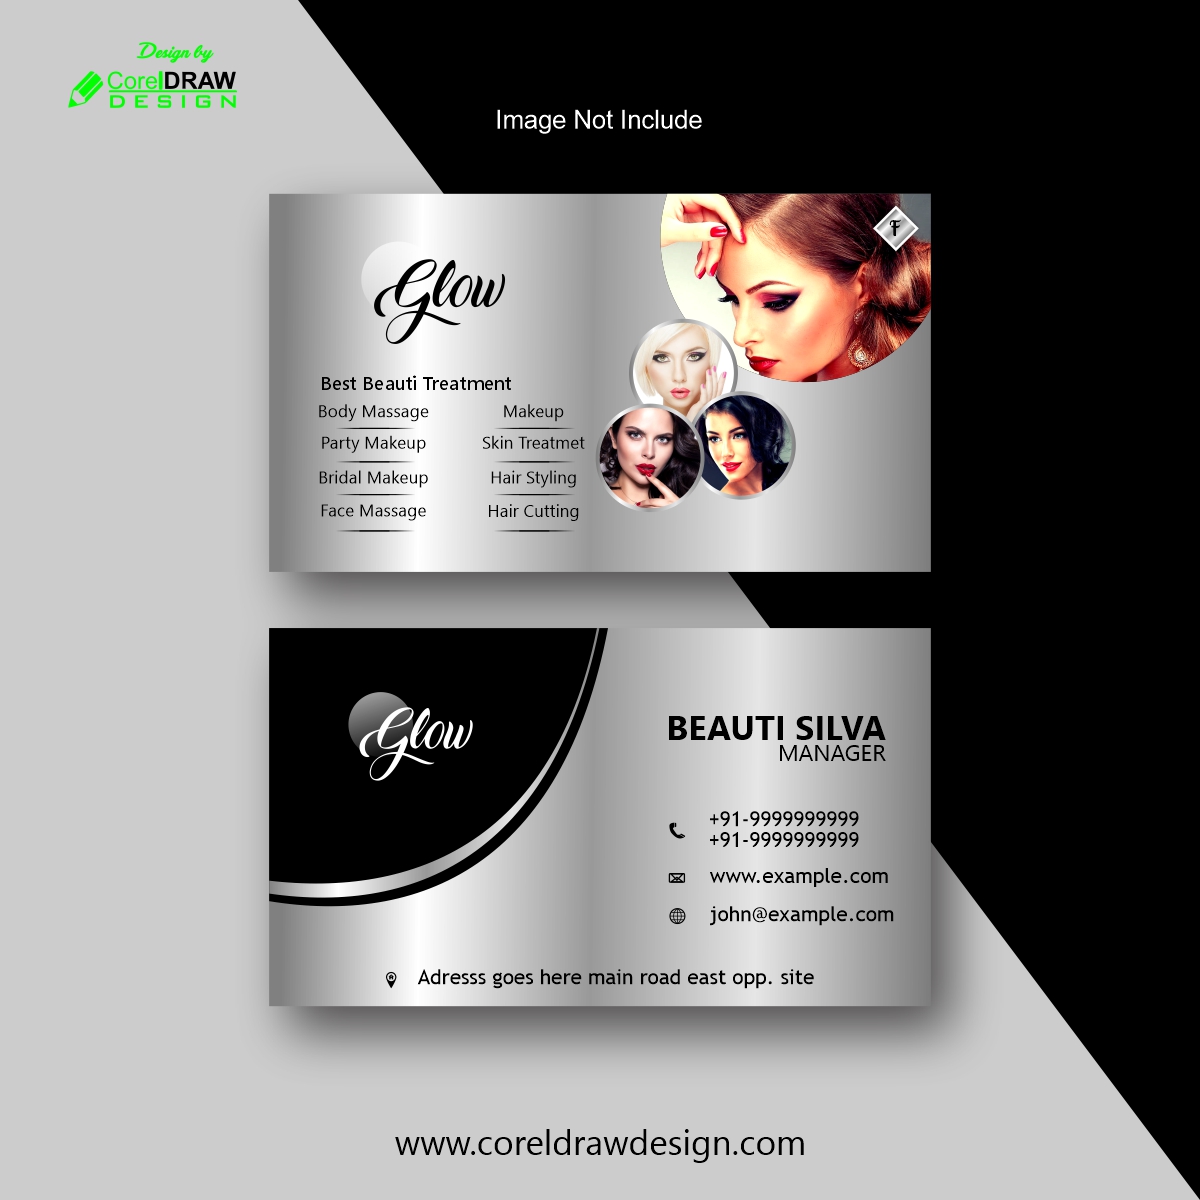 Glow Beauty Salon Business Card Design